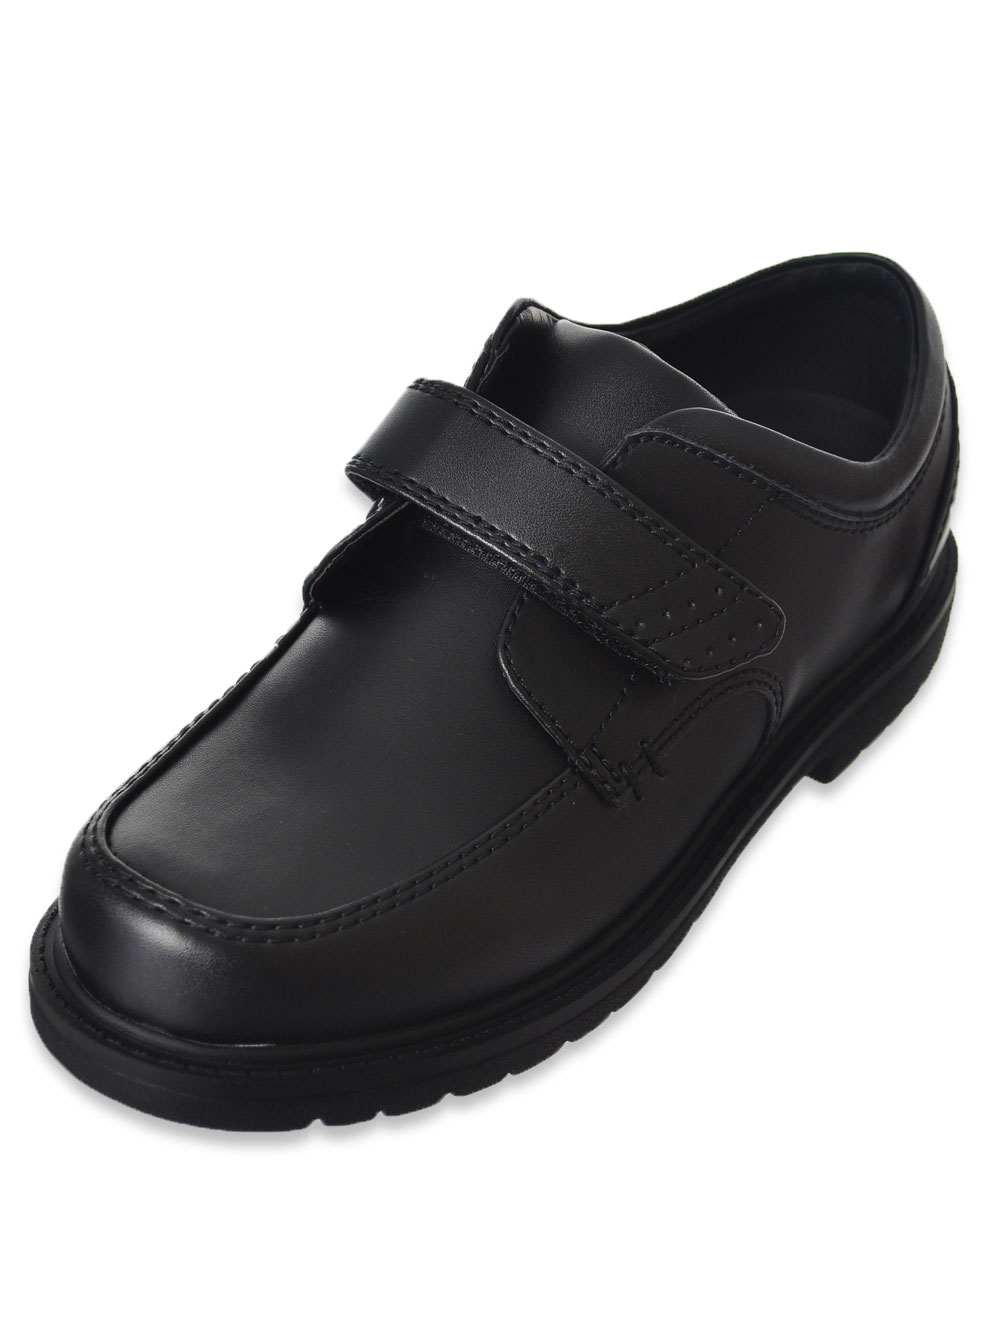 boys size 4 school shoes